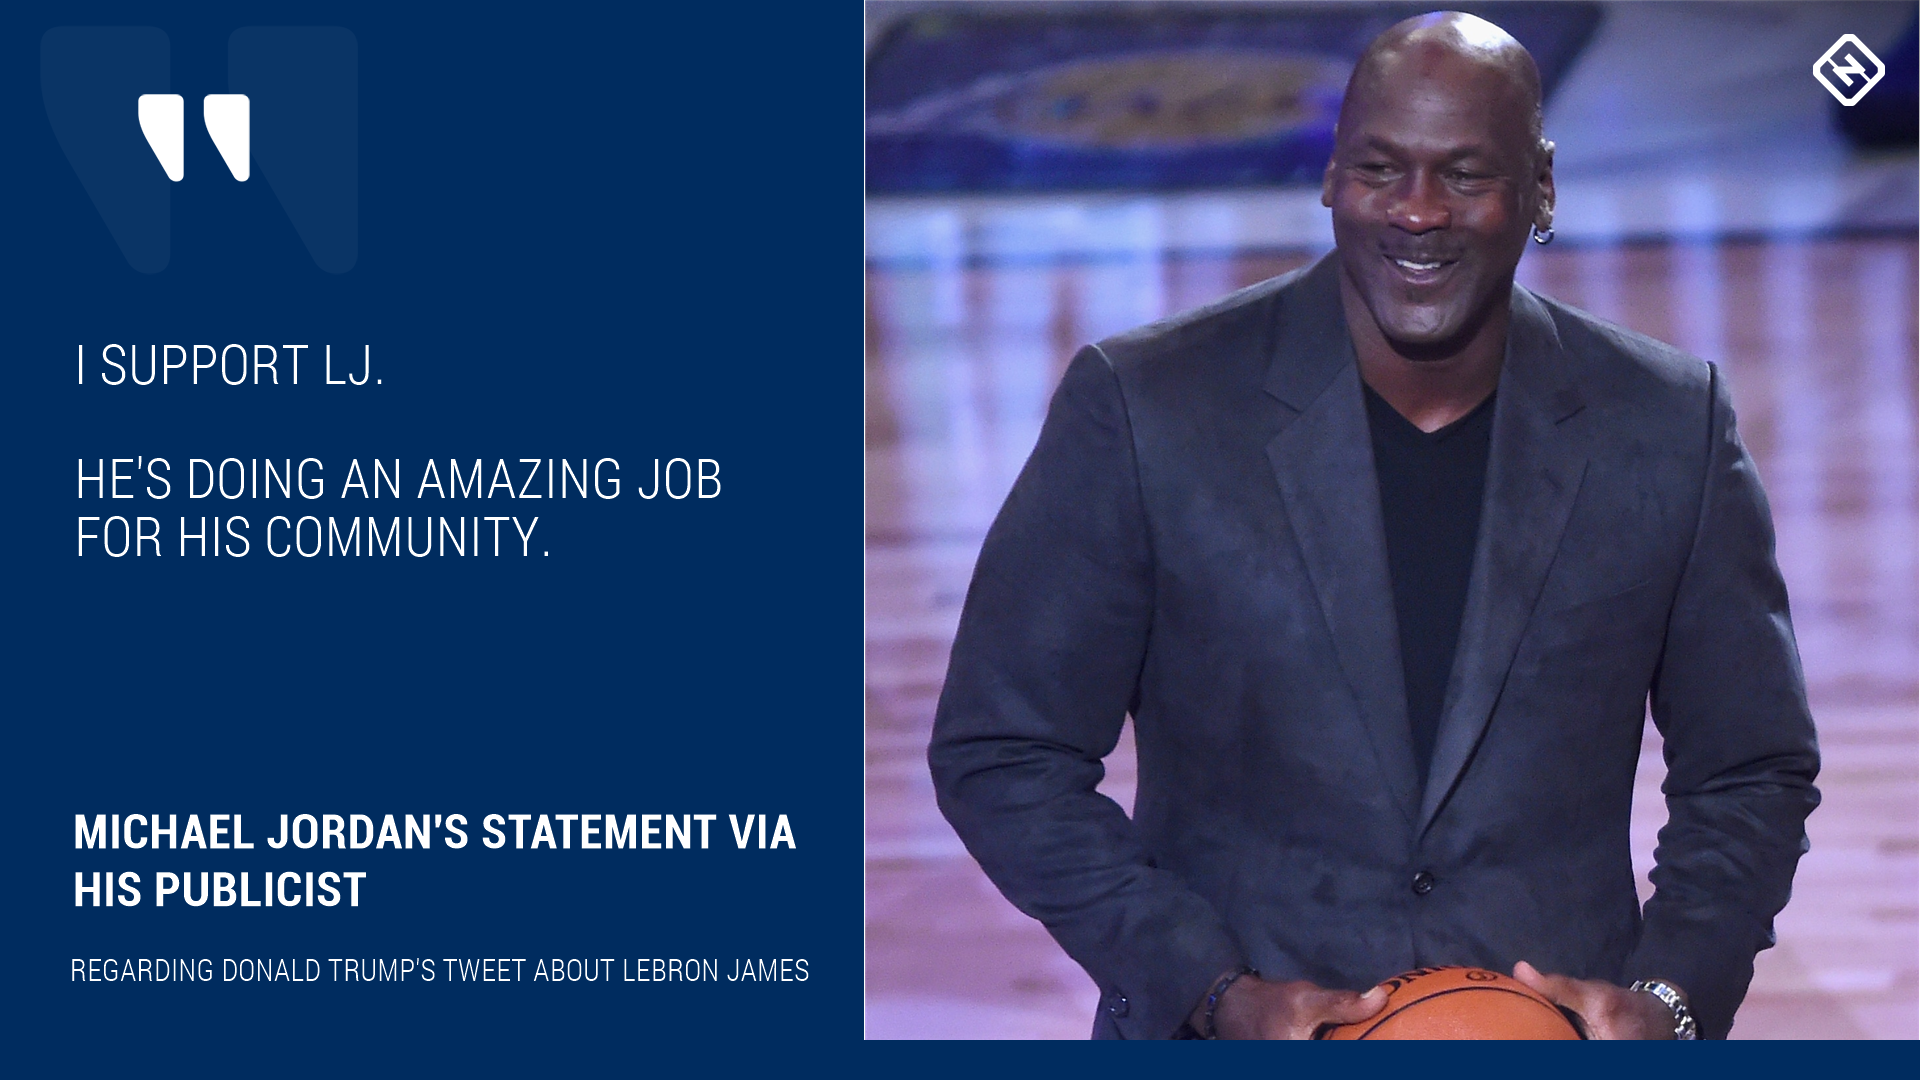 Sporting News on Twitter: "Michael Jordan's statement on Donald Trump's tweet about LeBron James. https://t.co/9kplP3vxwW" / Twitter